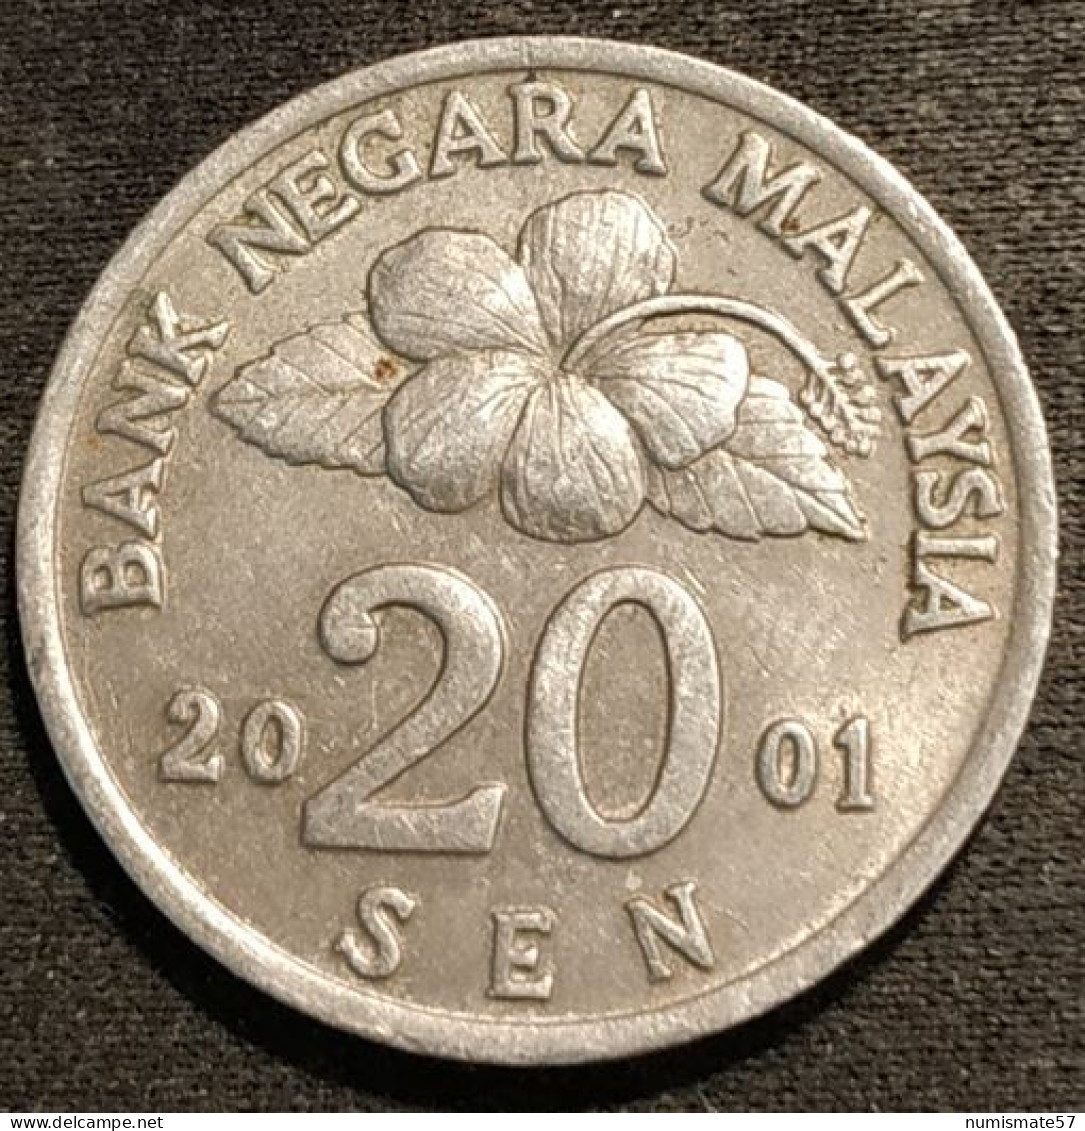 MALAISIE - 20 SEN 2001 - Agong - KM 52 - ( MALAYSIA ) - Malaysie